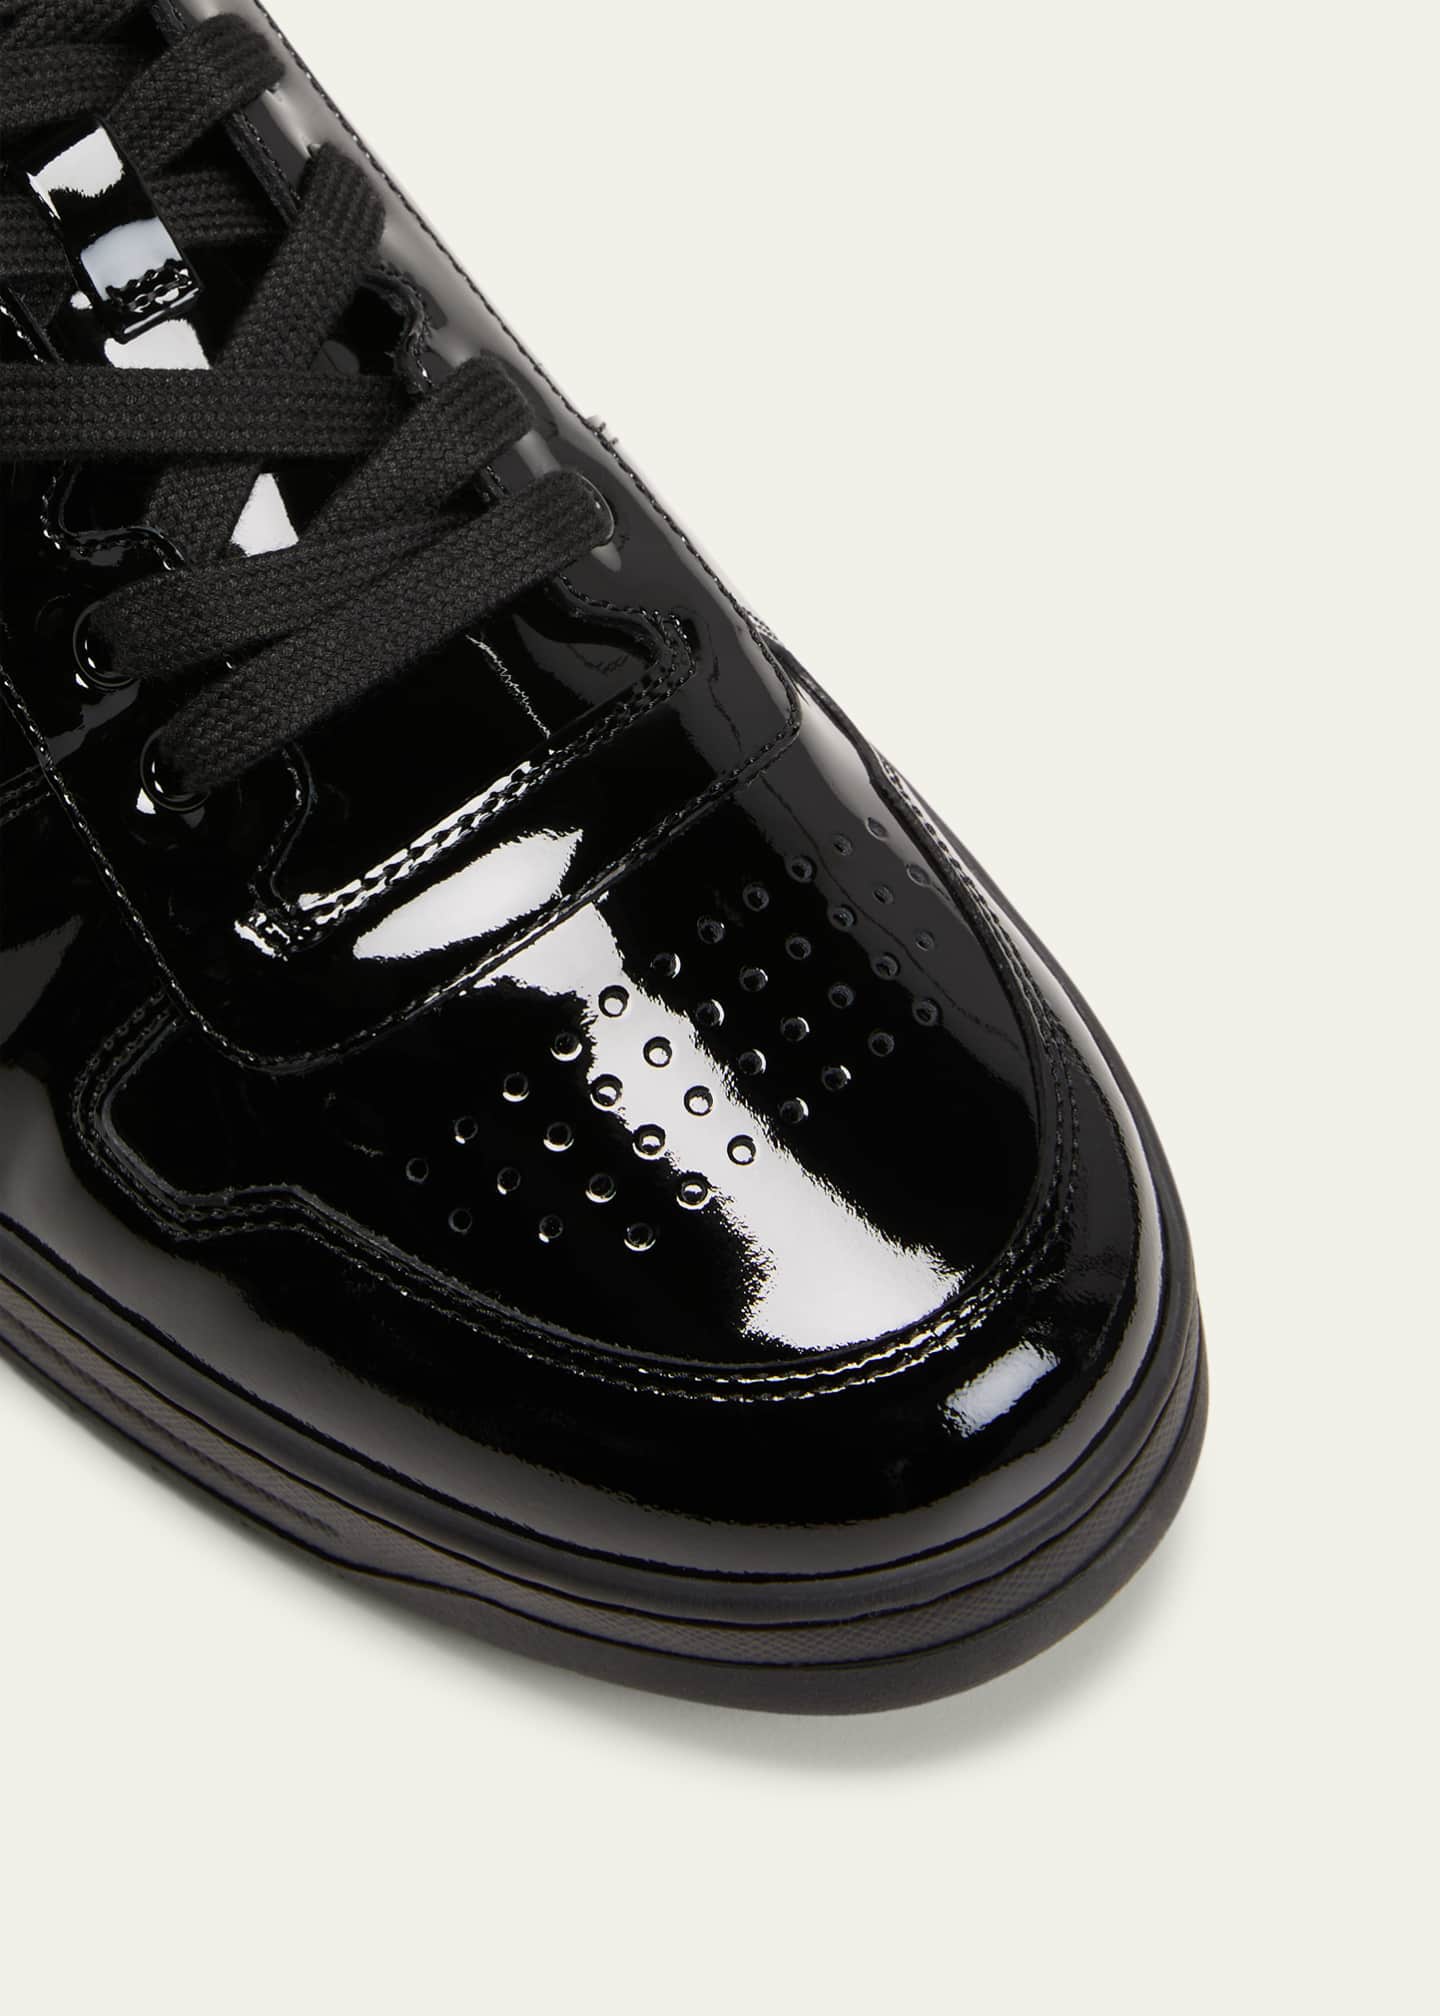 Prada Men's Downtown Patent Leather Low-Top Sneakers